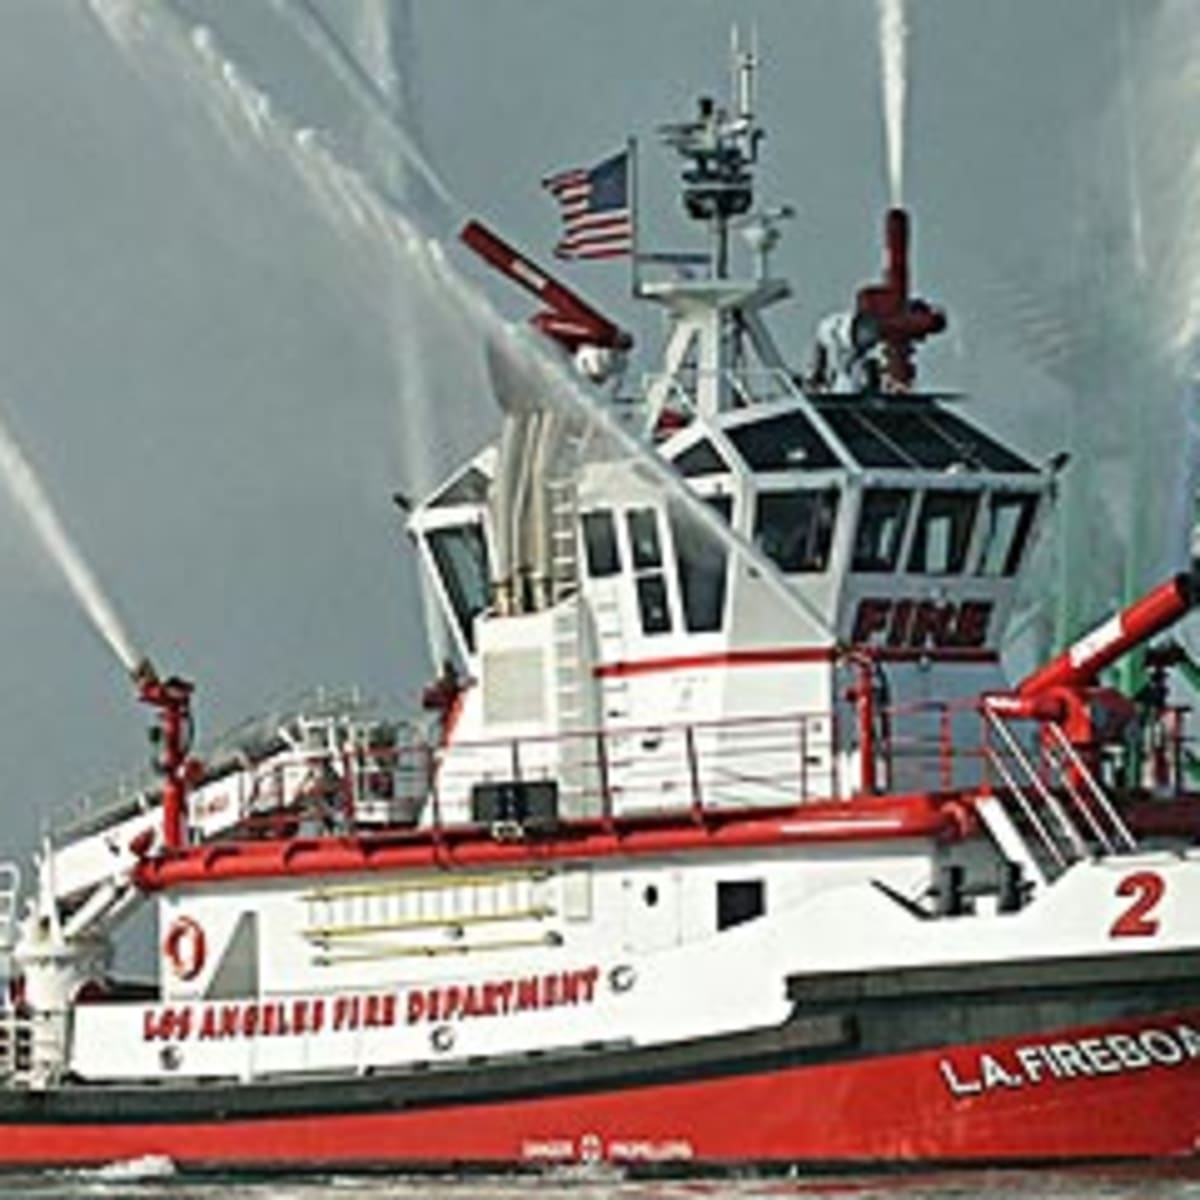 Fire Boat California LA County Fire Department Fireboat 110 Marina del Rey